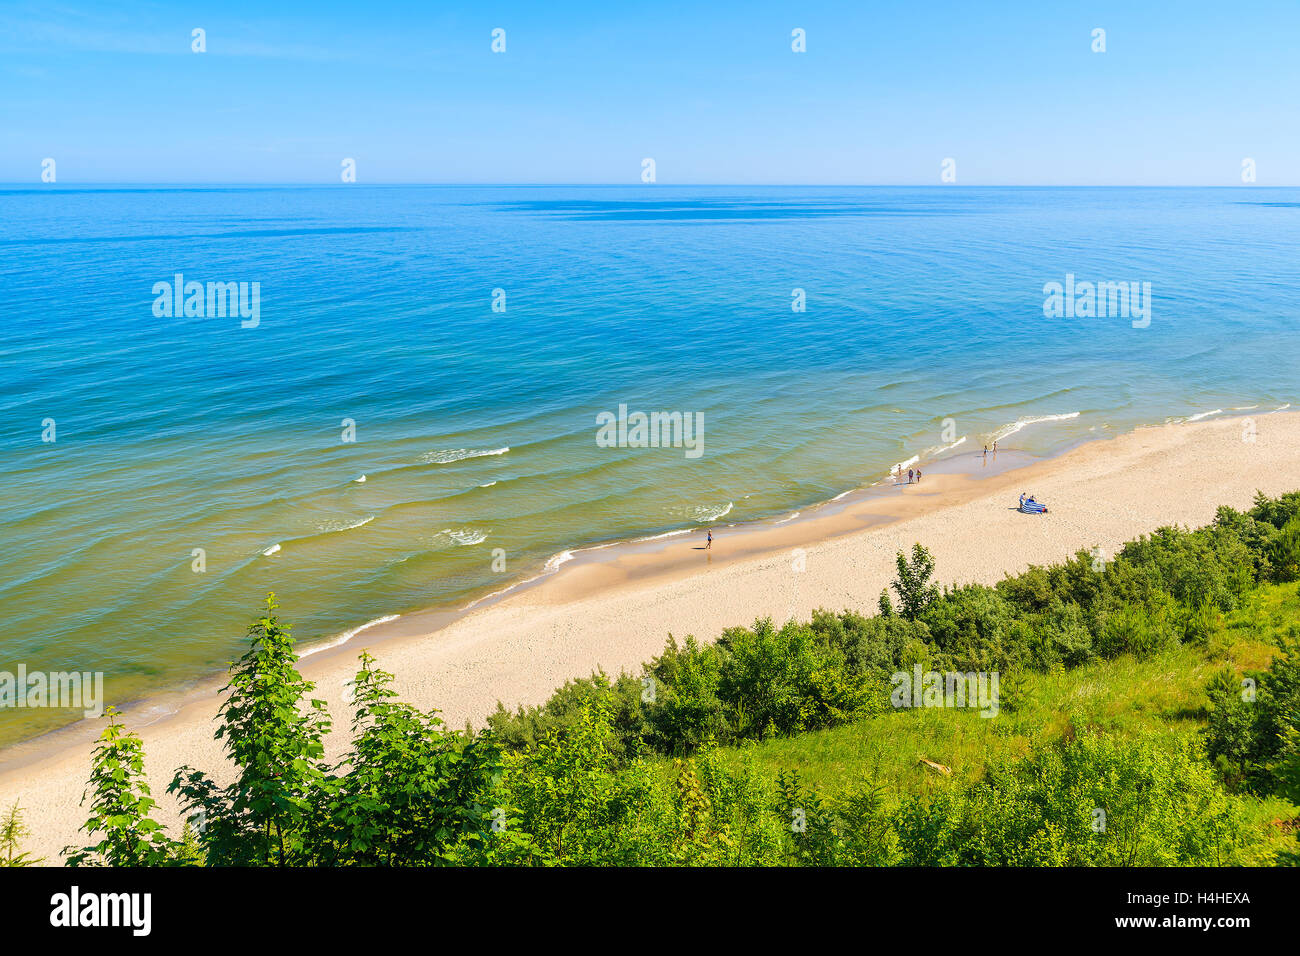 A view of sandy beach from cliff in Jastrzebia Gora coastal village, Baltic Sea, Poland Stock Photo